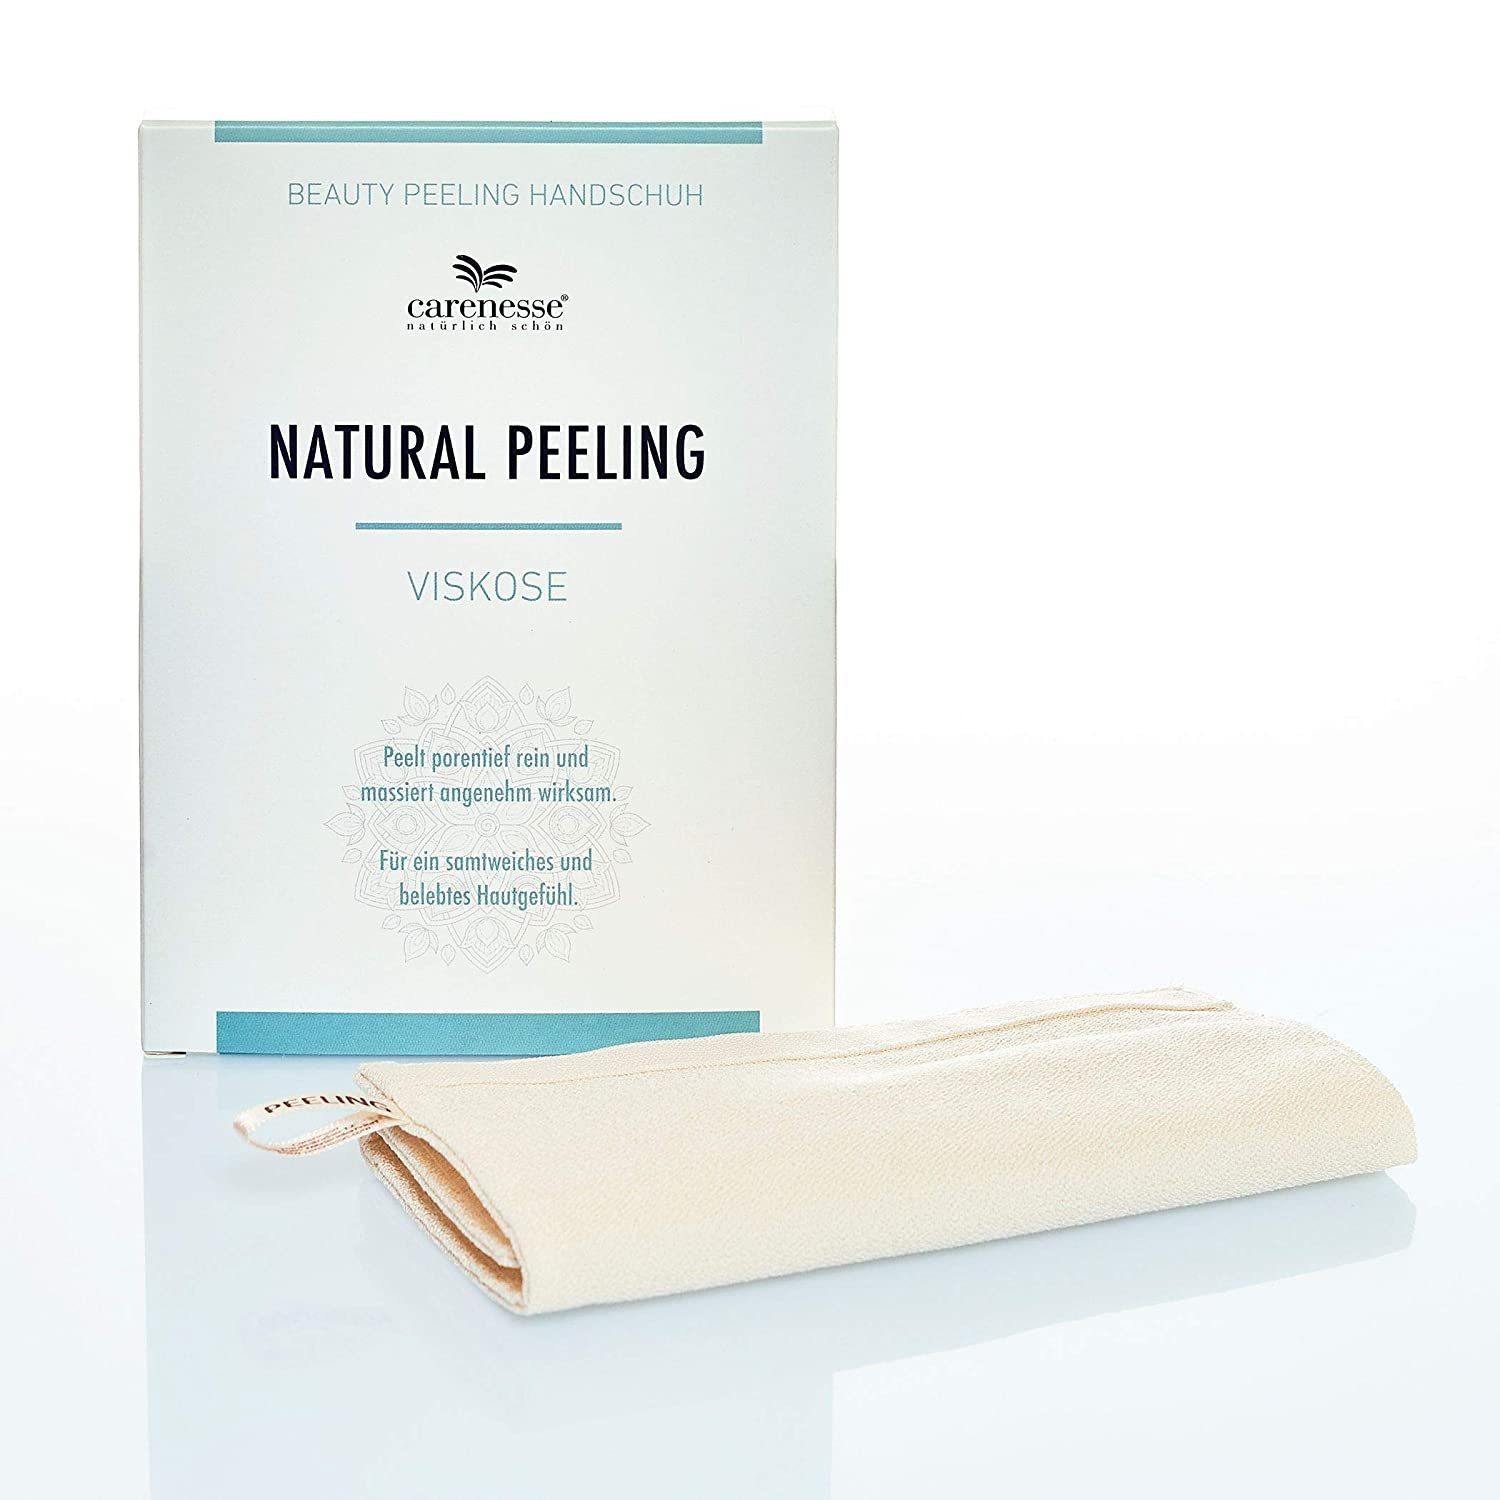 Carenesse Körperpeeling Natural exfoliating natürlich porentief, Viskose & Scrub Peeling Body Handschuh glove Peelinghandschuh Massagehandschuh, effektiv Peeling